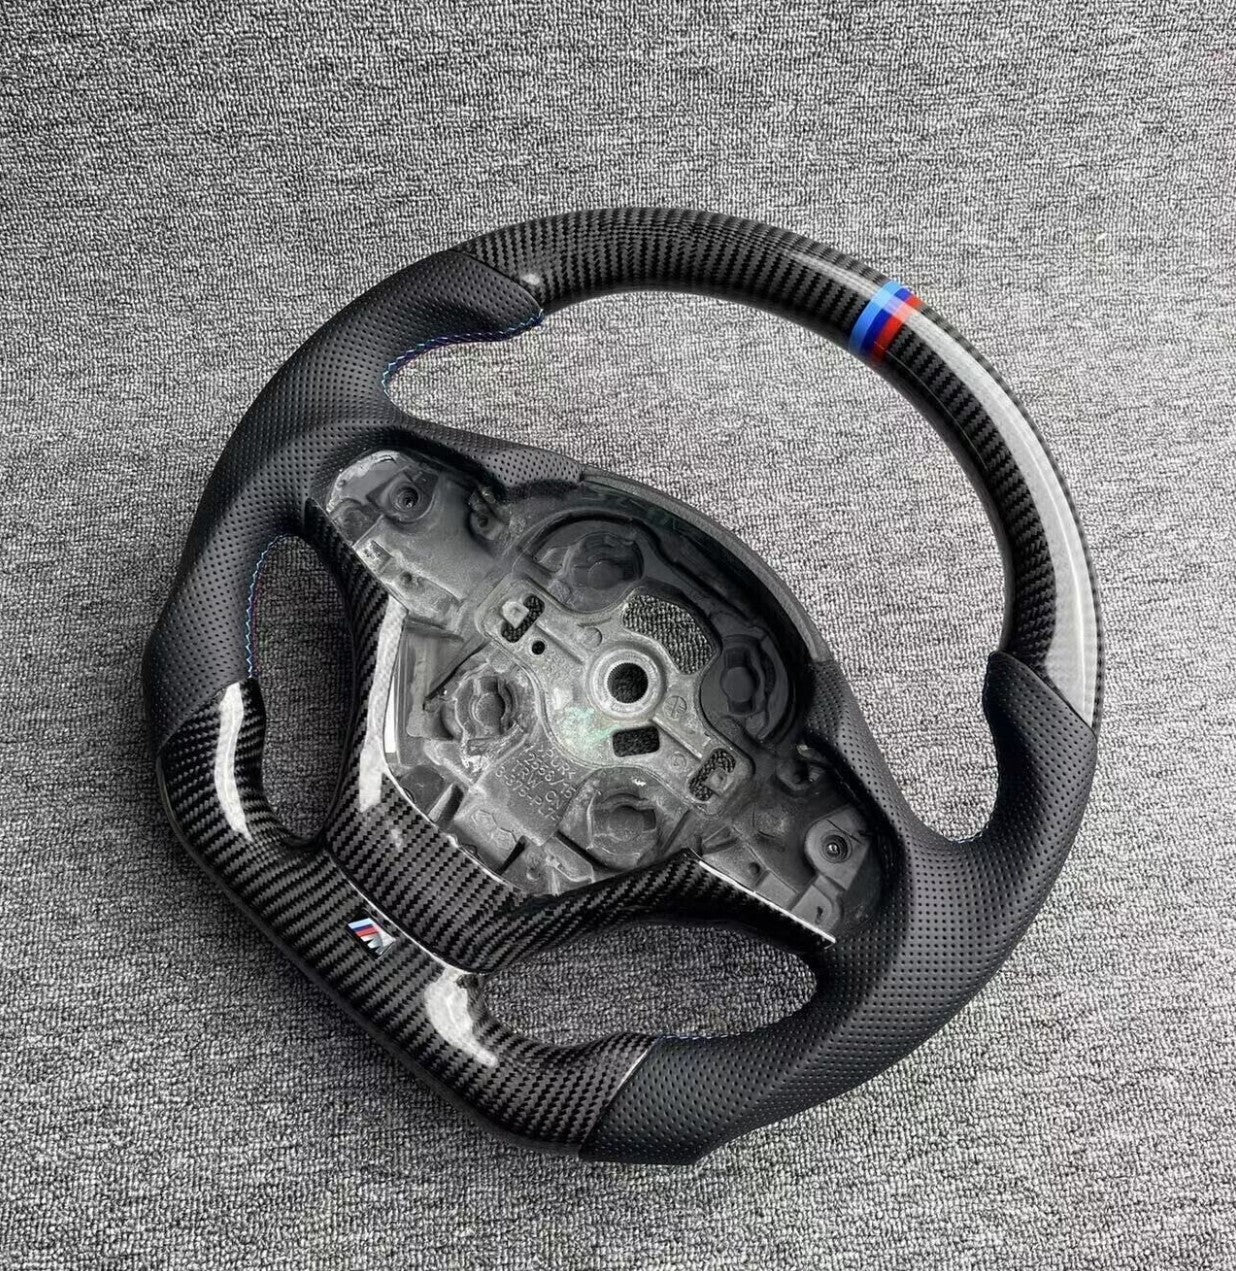 Fully Custom Carbon Fiber Steering Wheel - BMW E Chassis